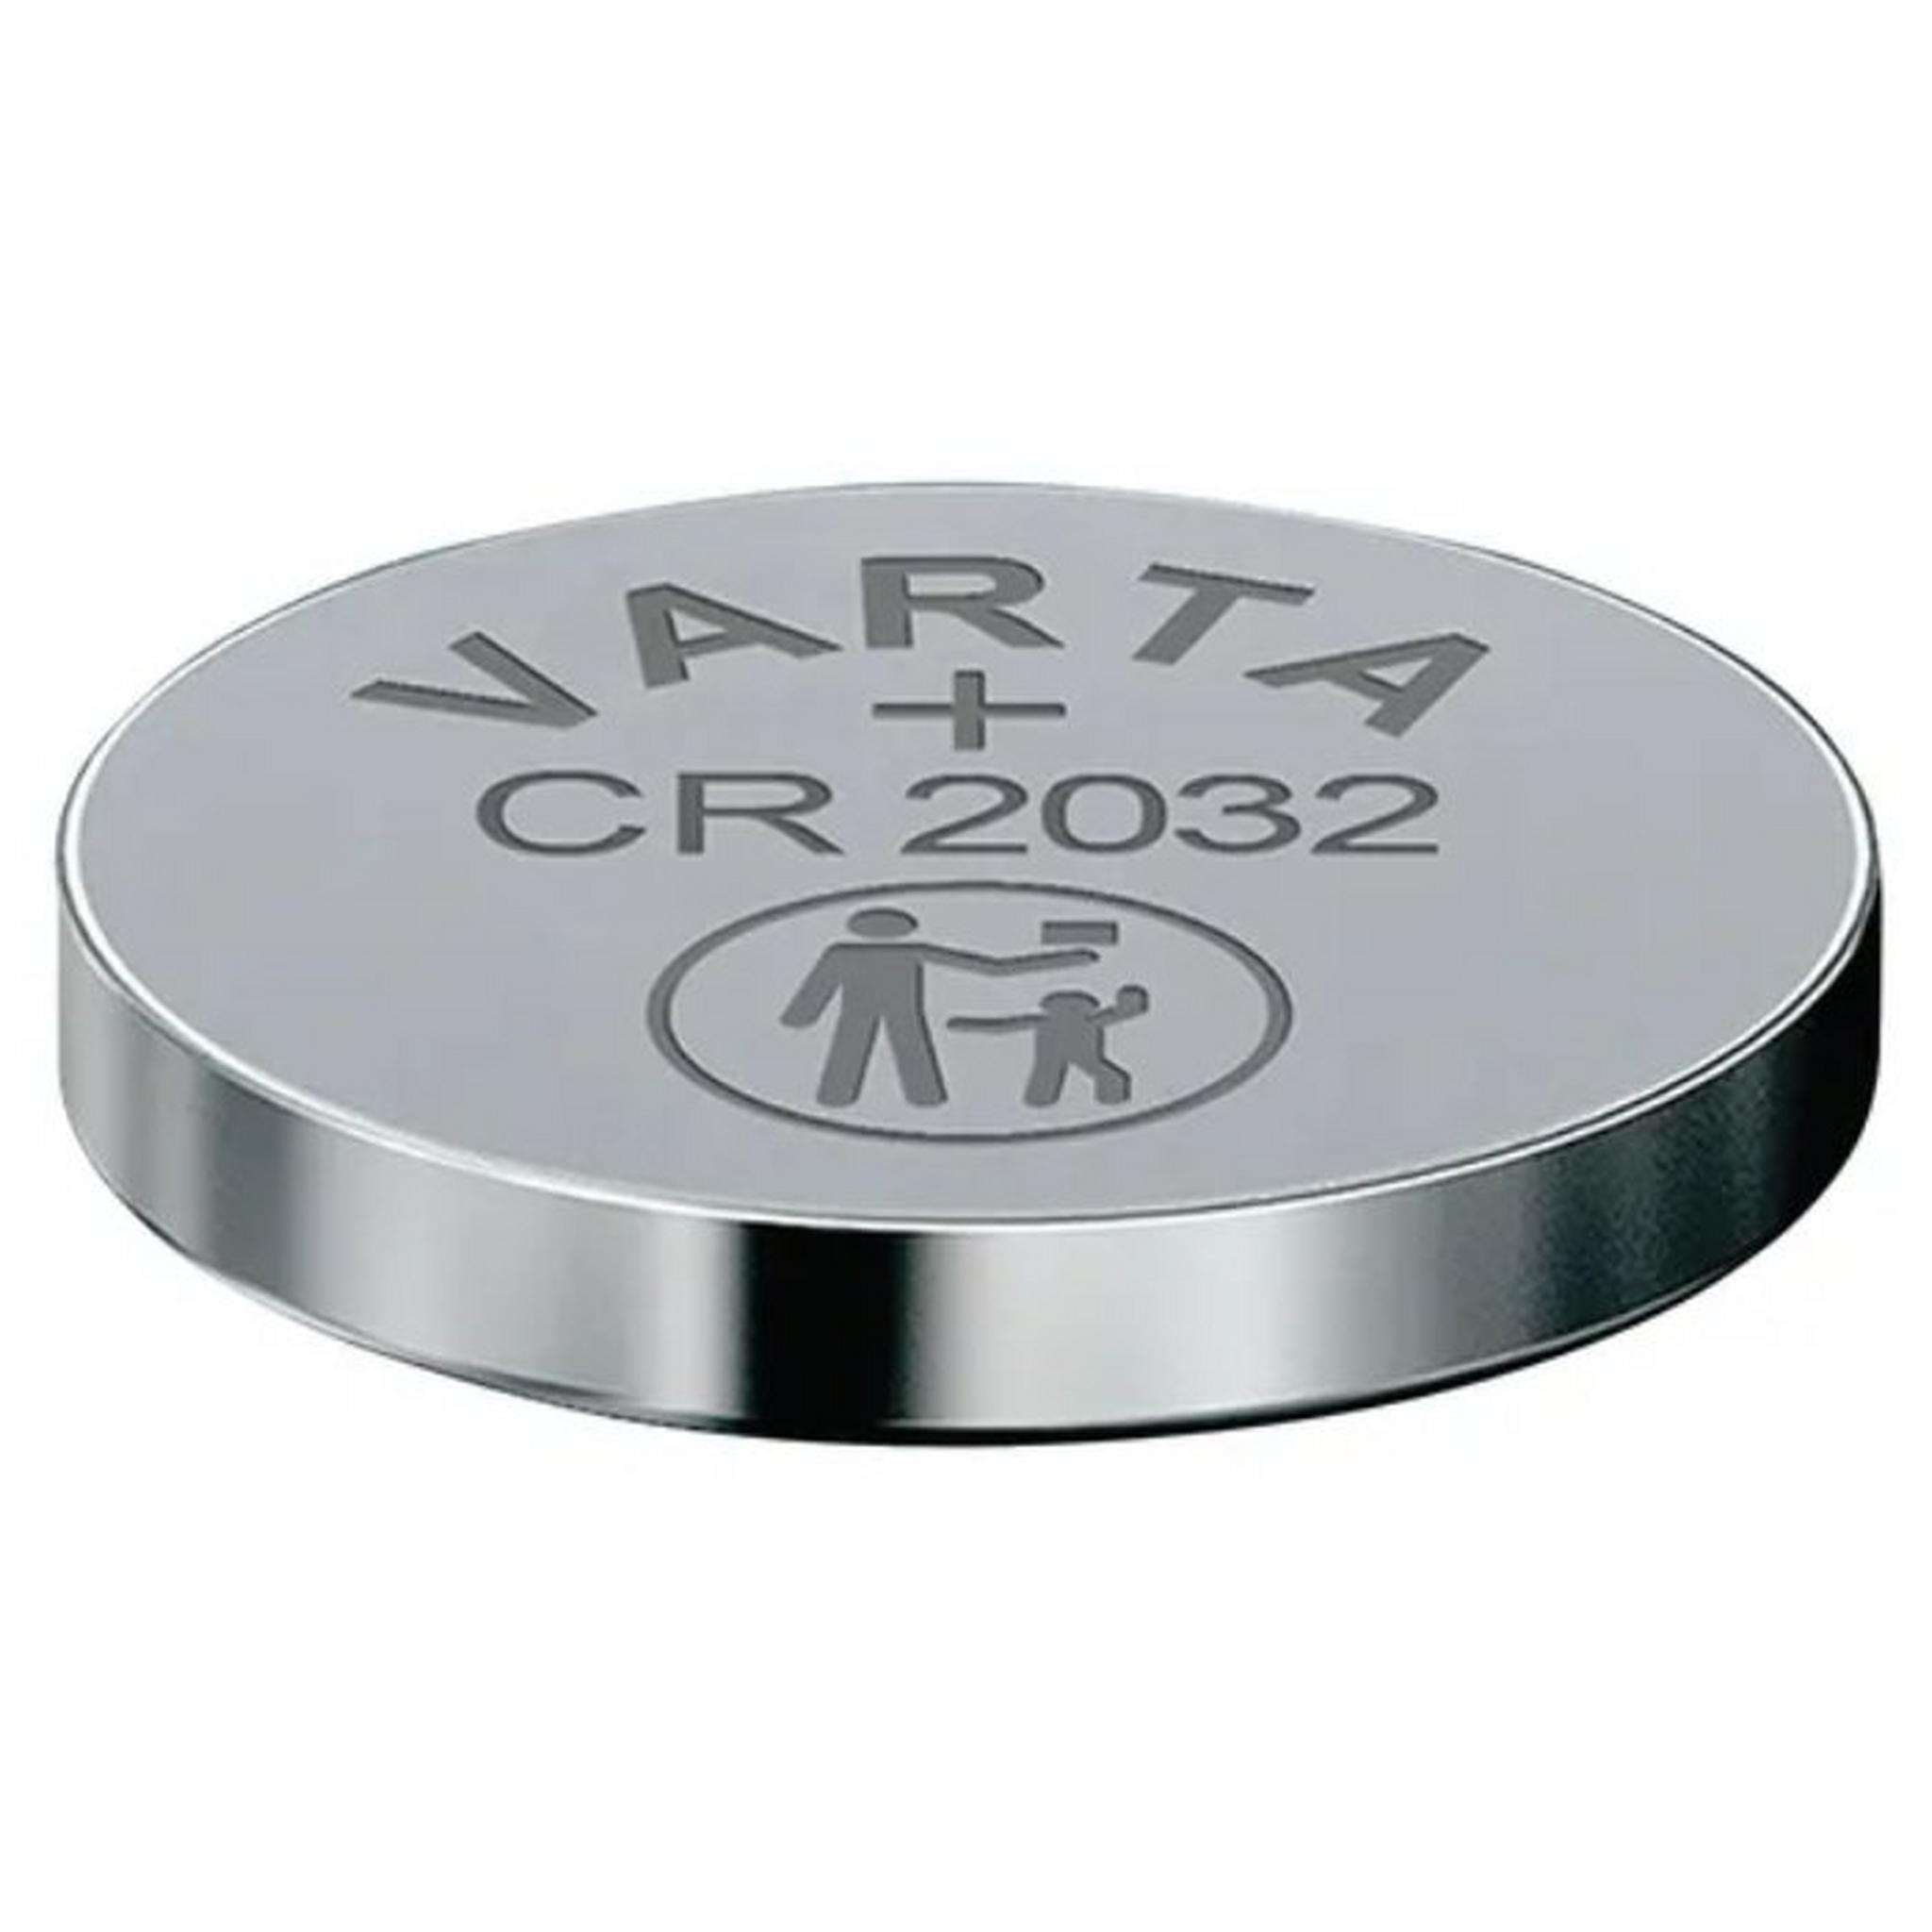 Varta Lithium coin cell batteries - CR2032